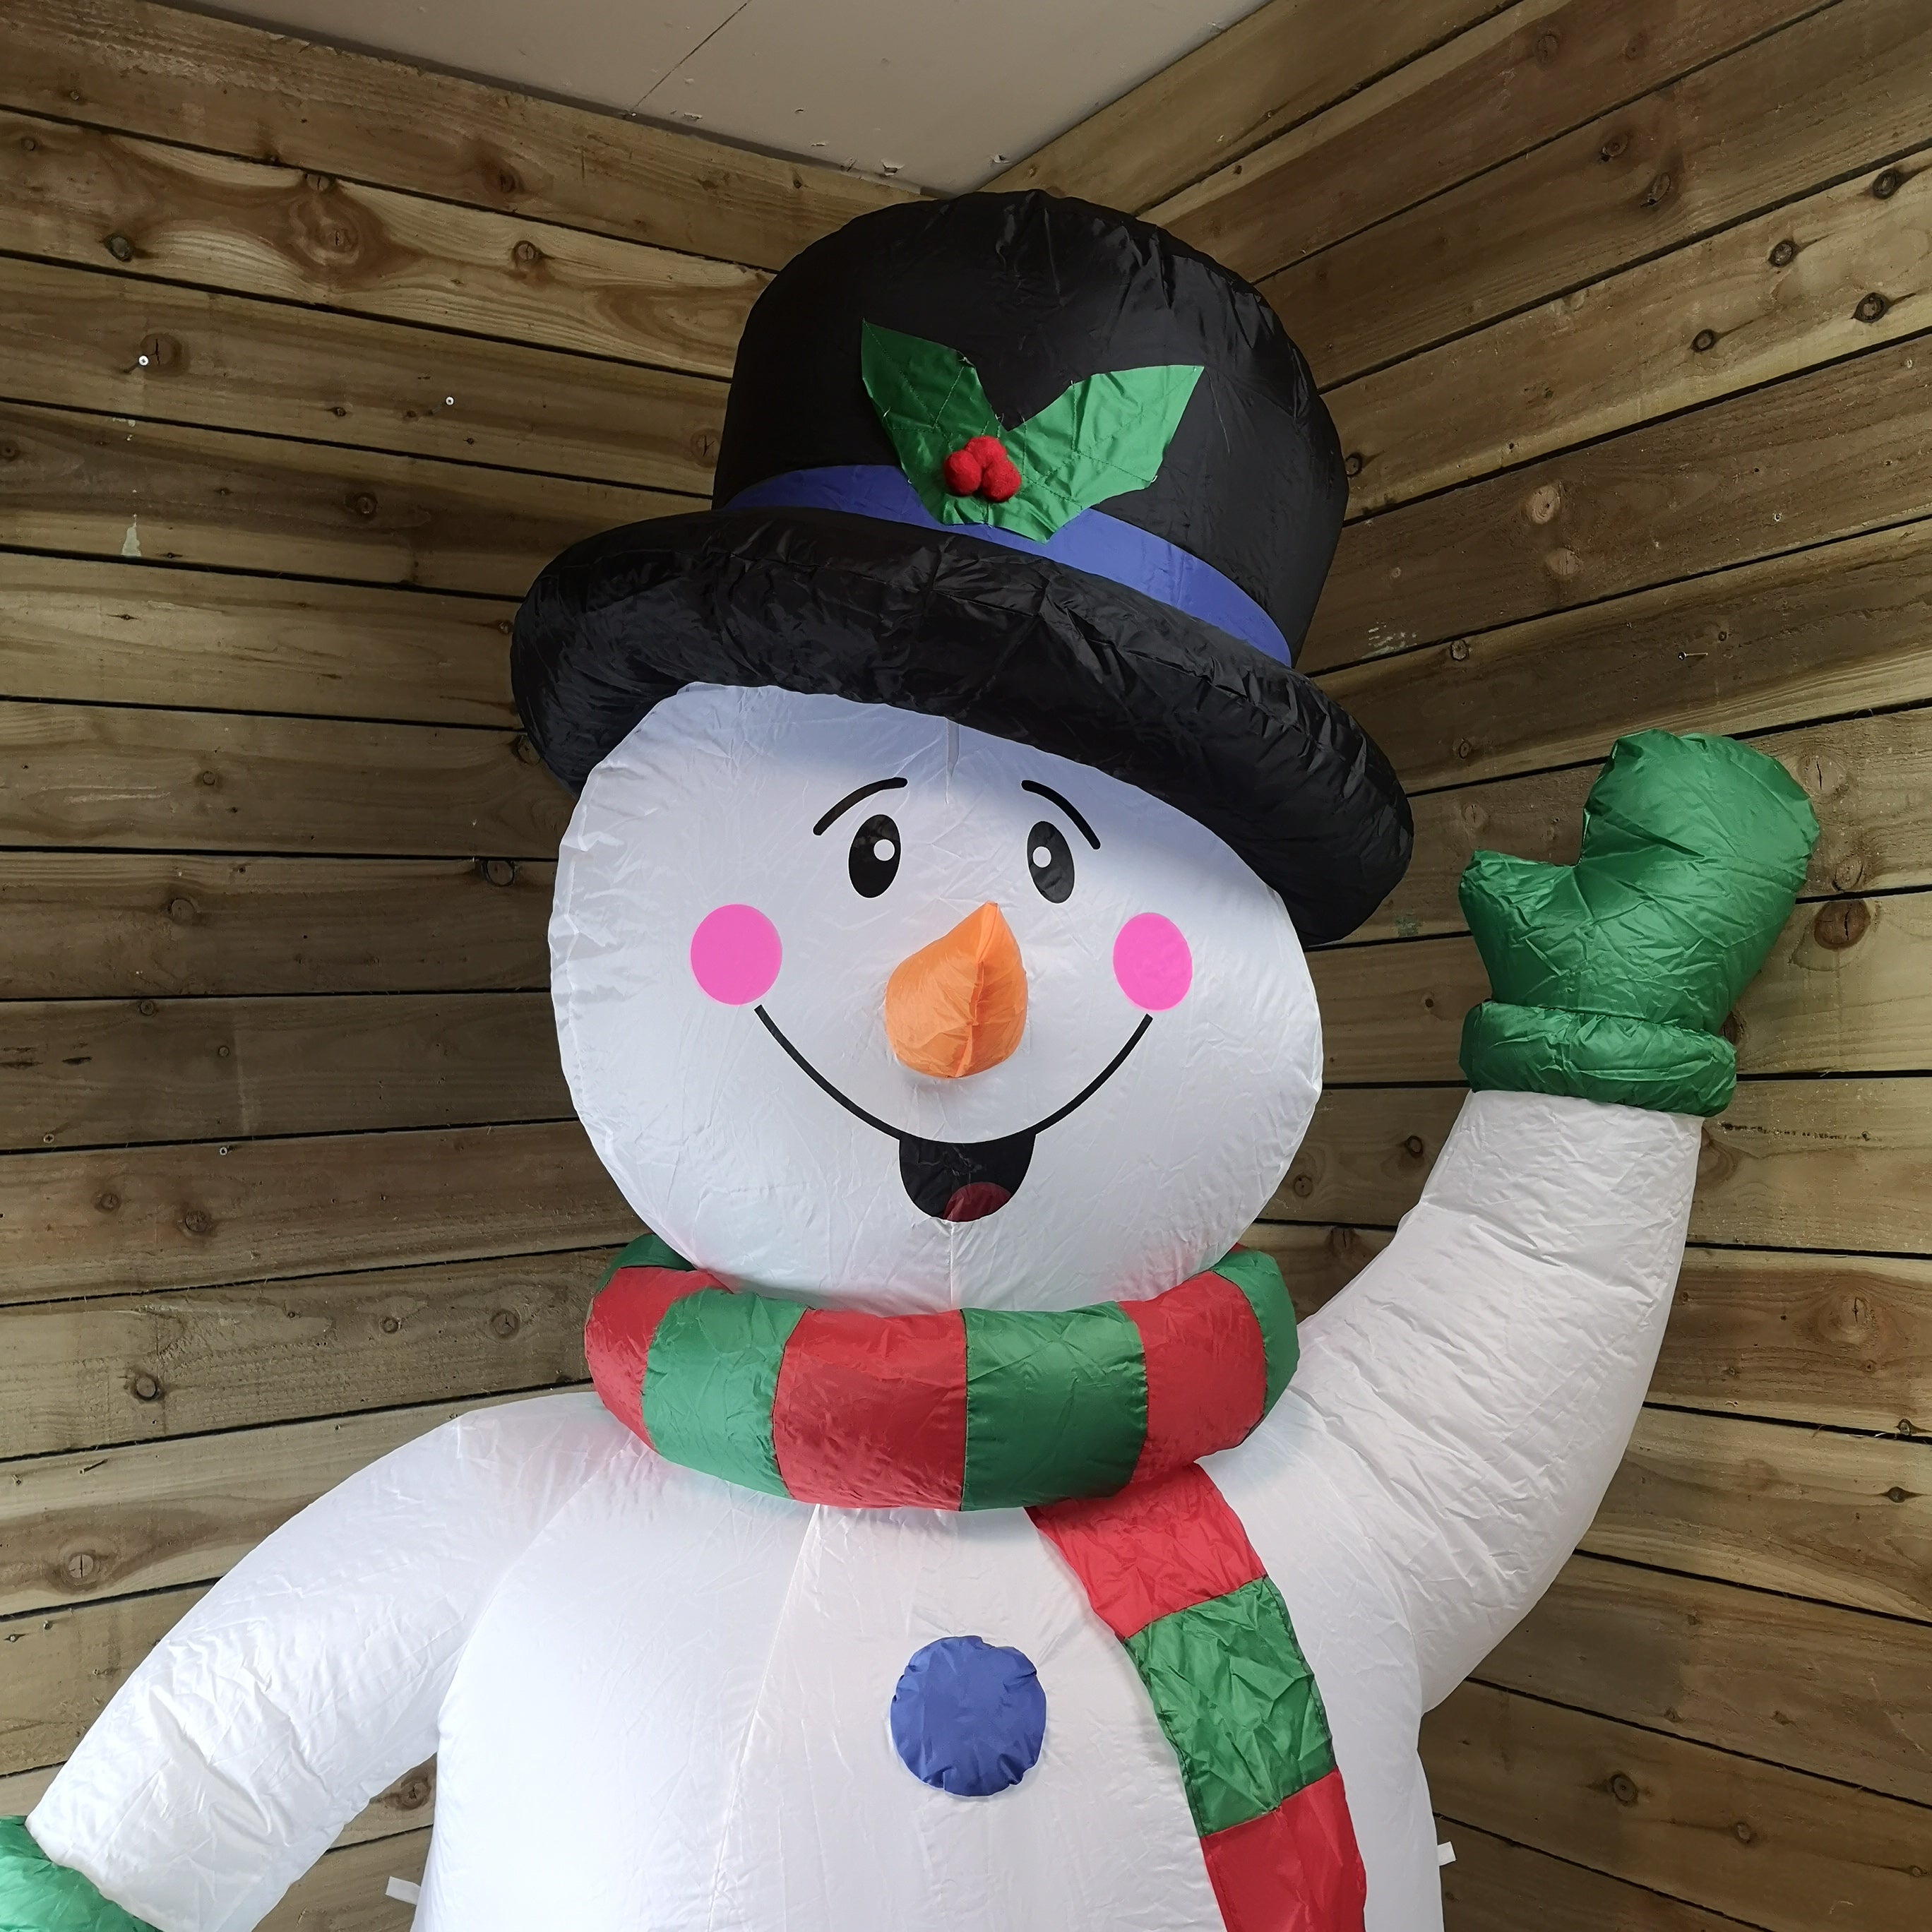 Premier 2.4M Indoor And Outdoor Inflatable Lit Snowman